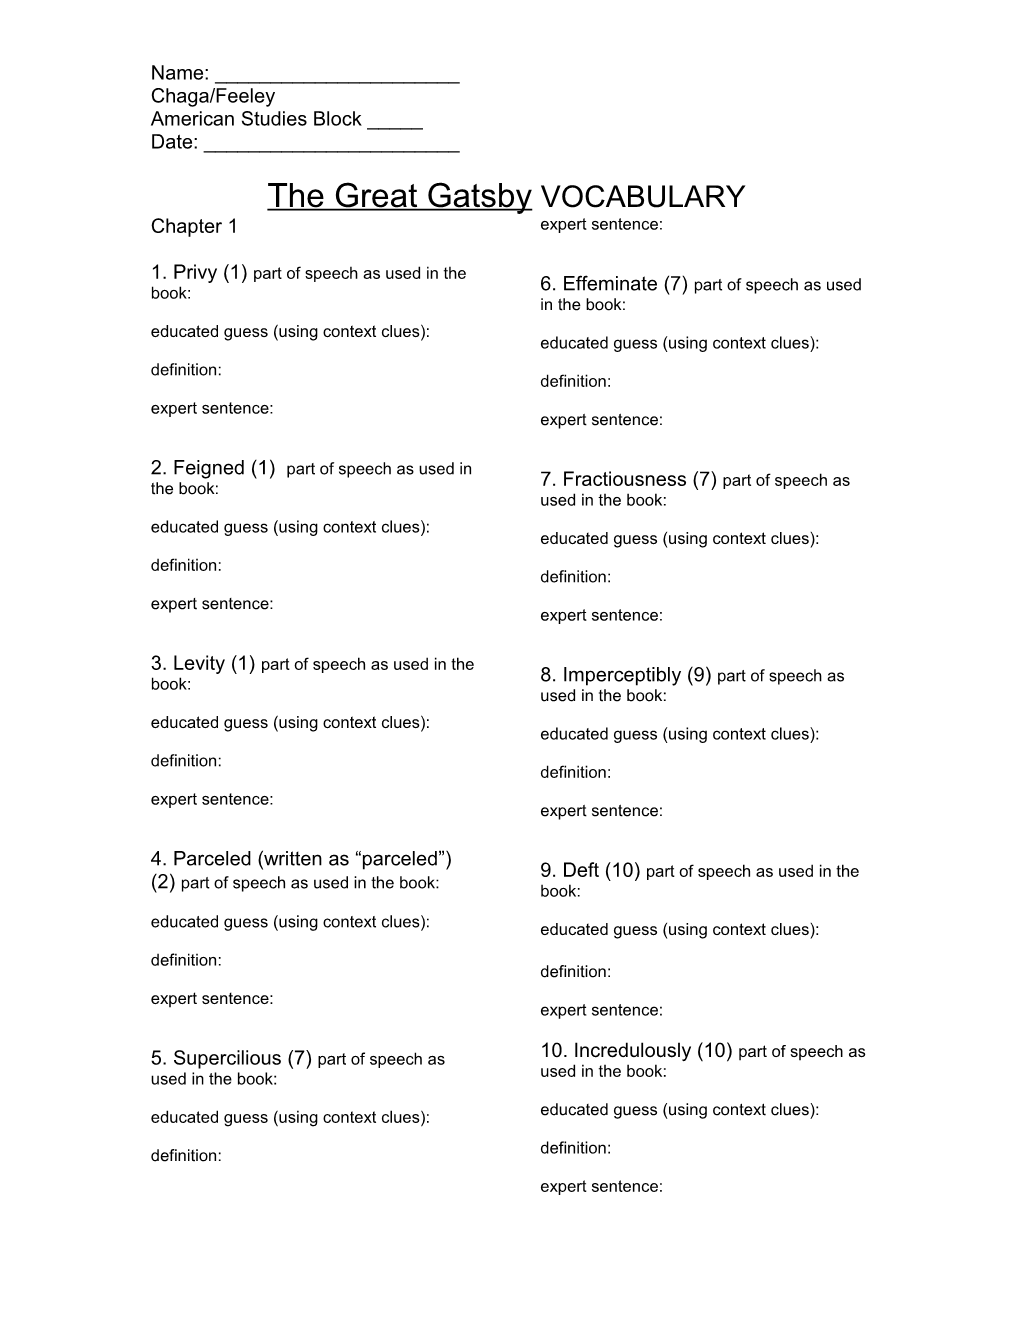 The Great Gatsby VOCABULARY